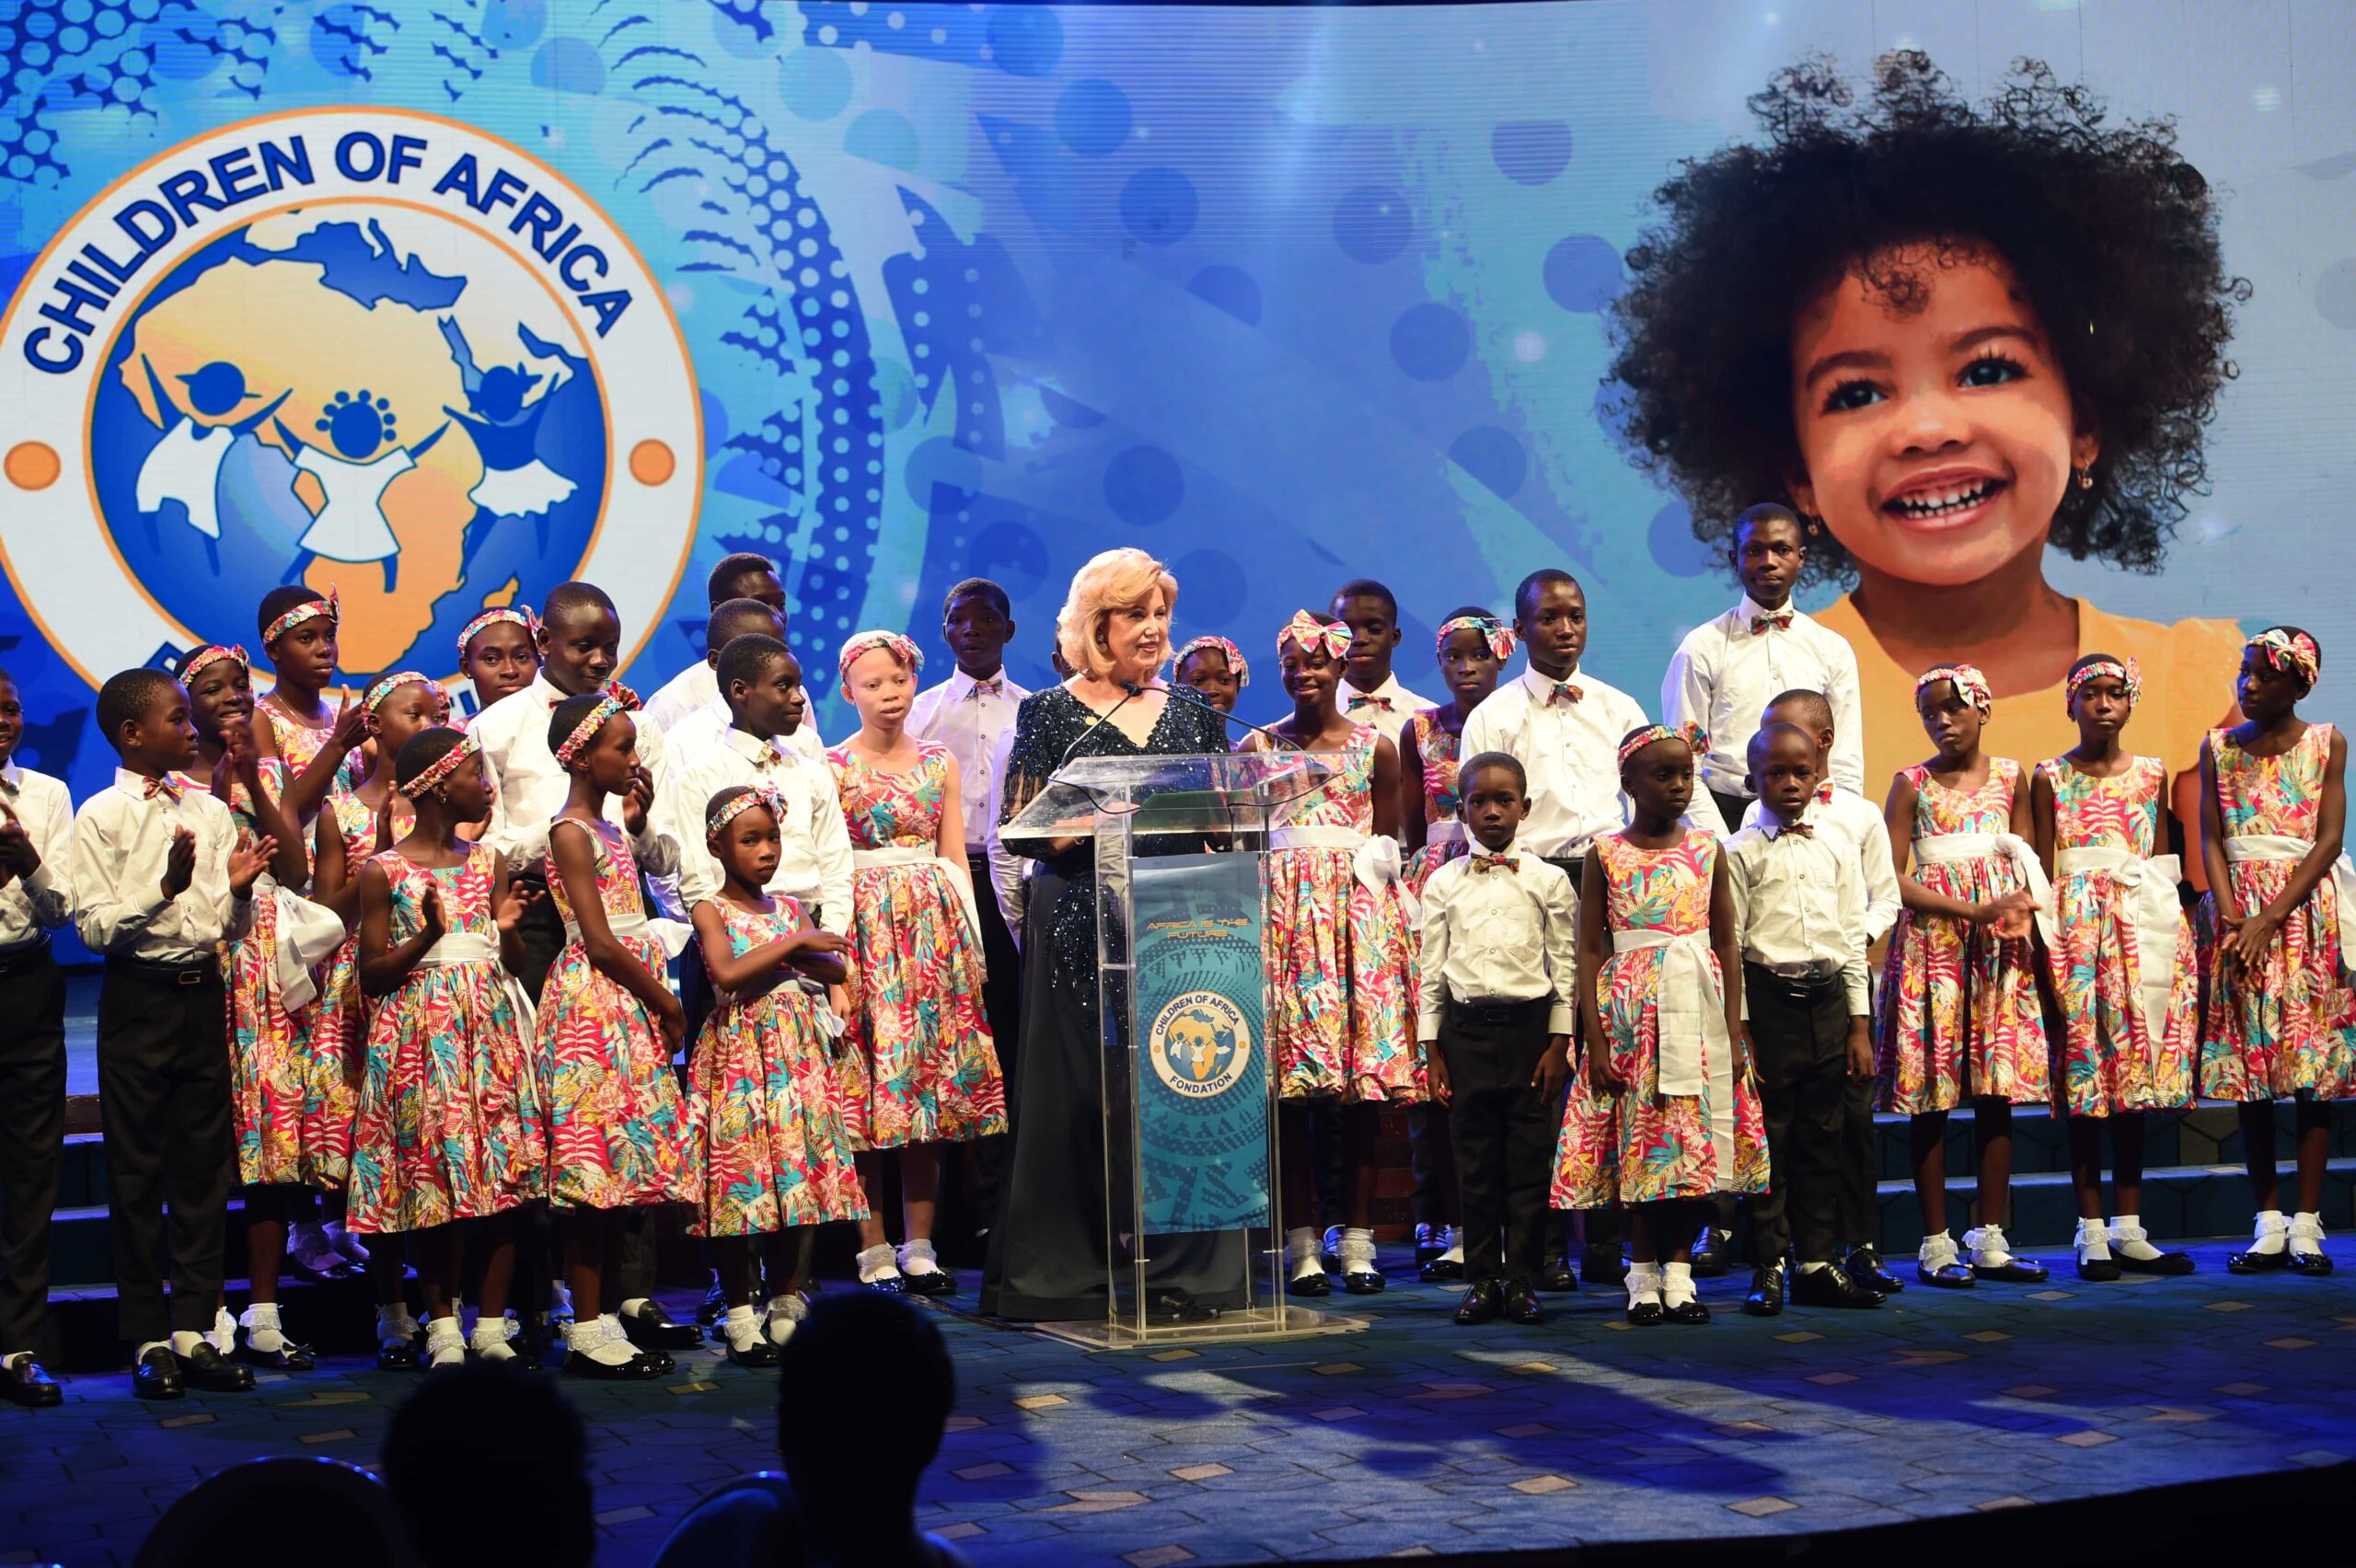 Dîner de Gala de la Fondation Children Of Africa: Pluie de stars à Abidjan le vendredi 1er mars; Carla Bruni, la femme de Nicolas Sarkozy, parmi les artistes invités